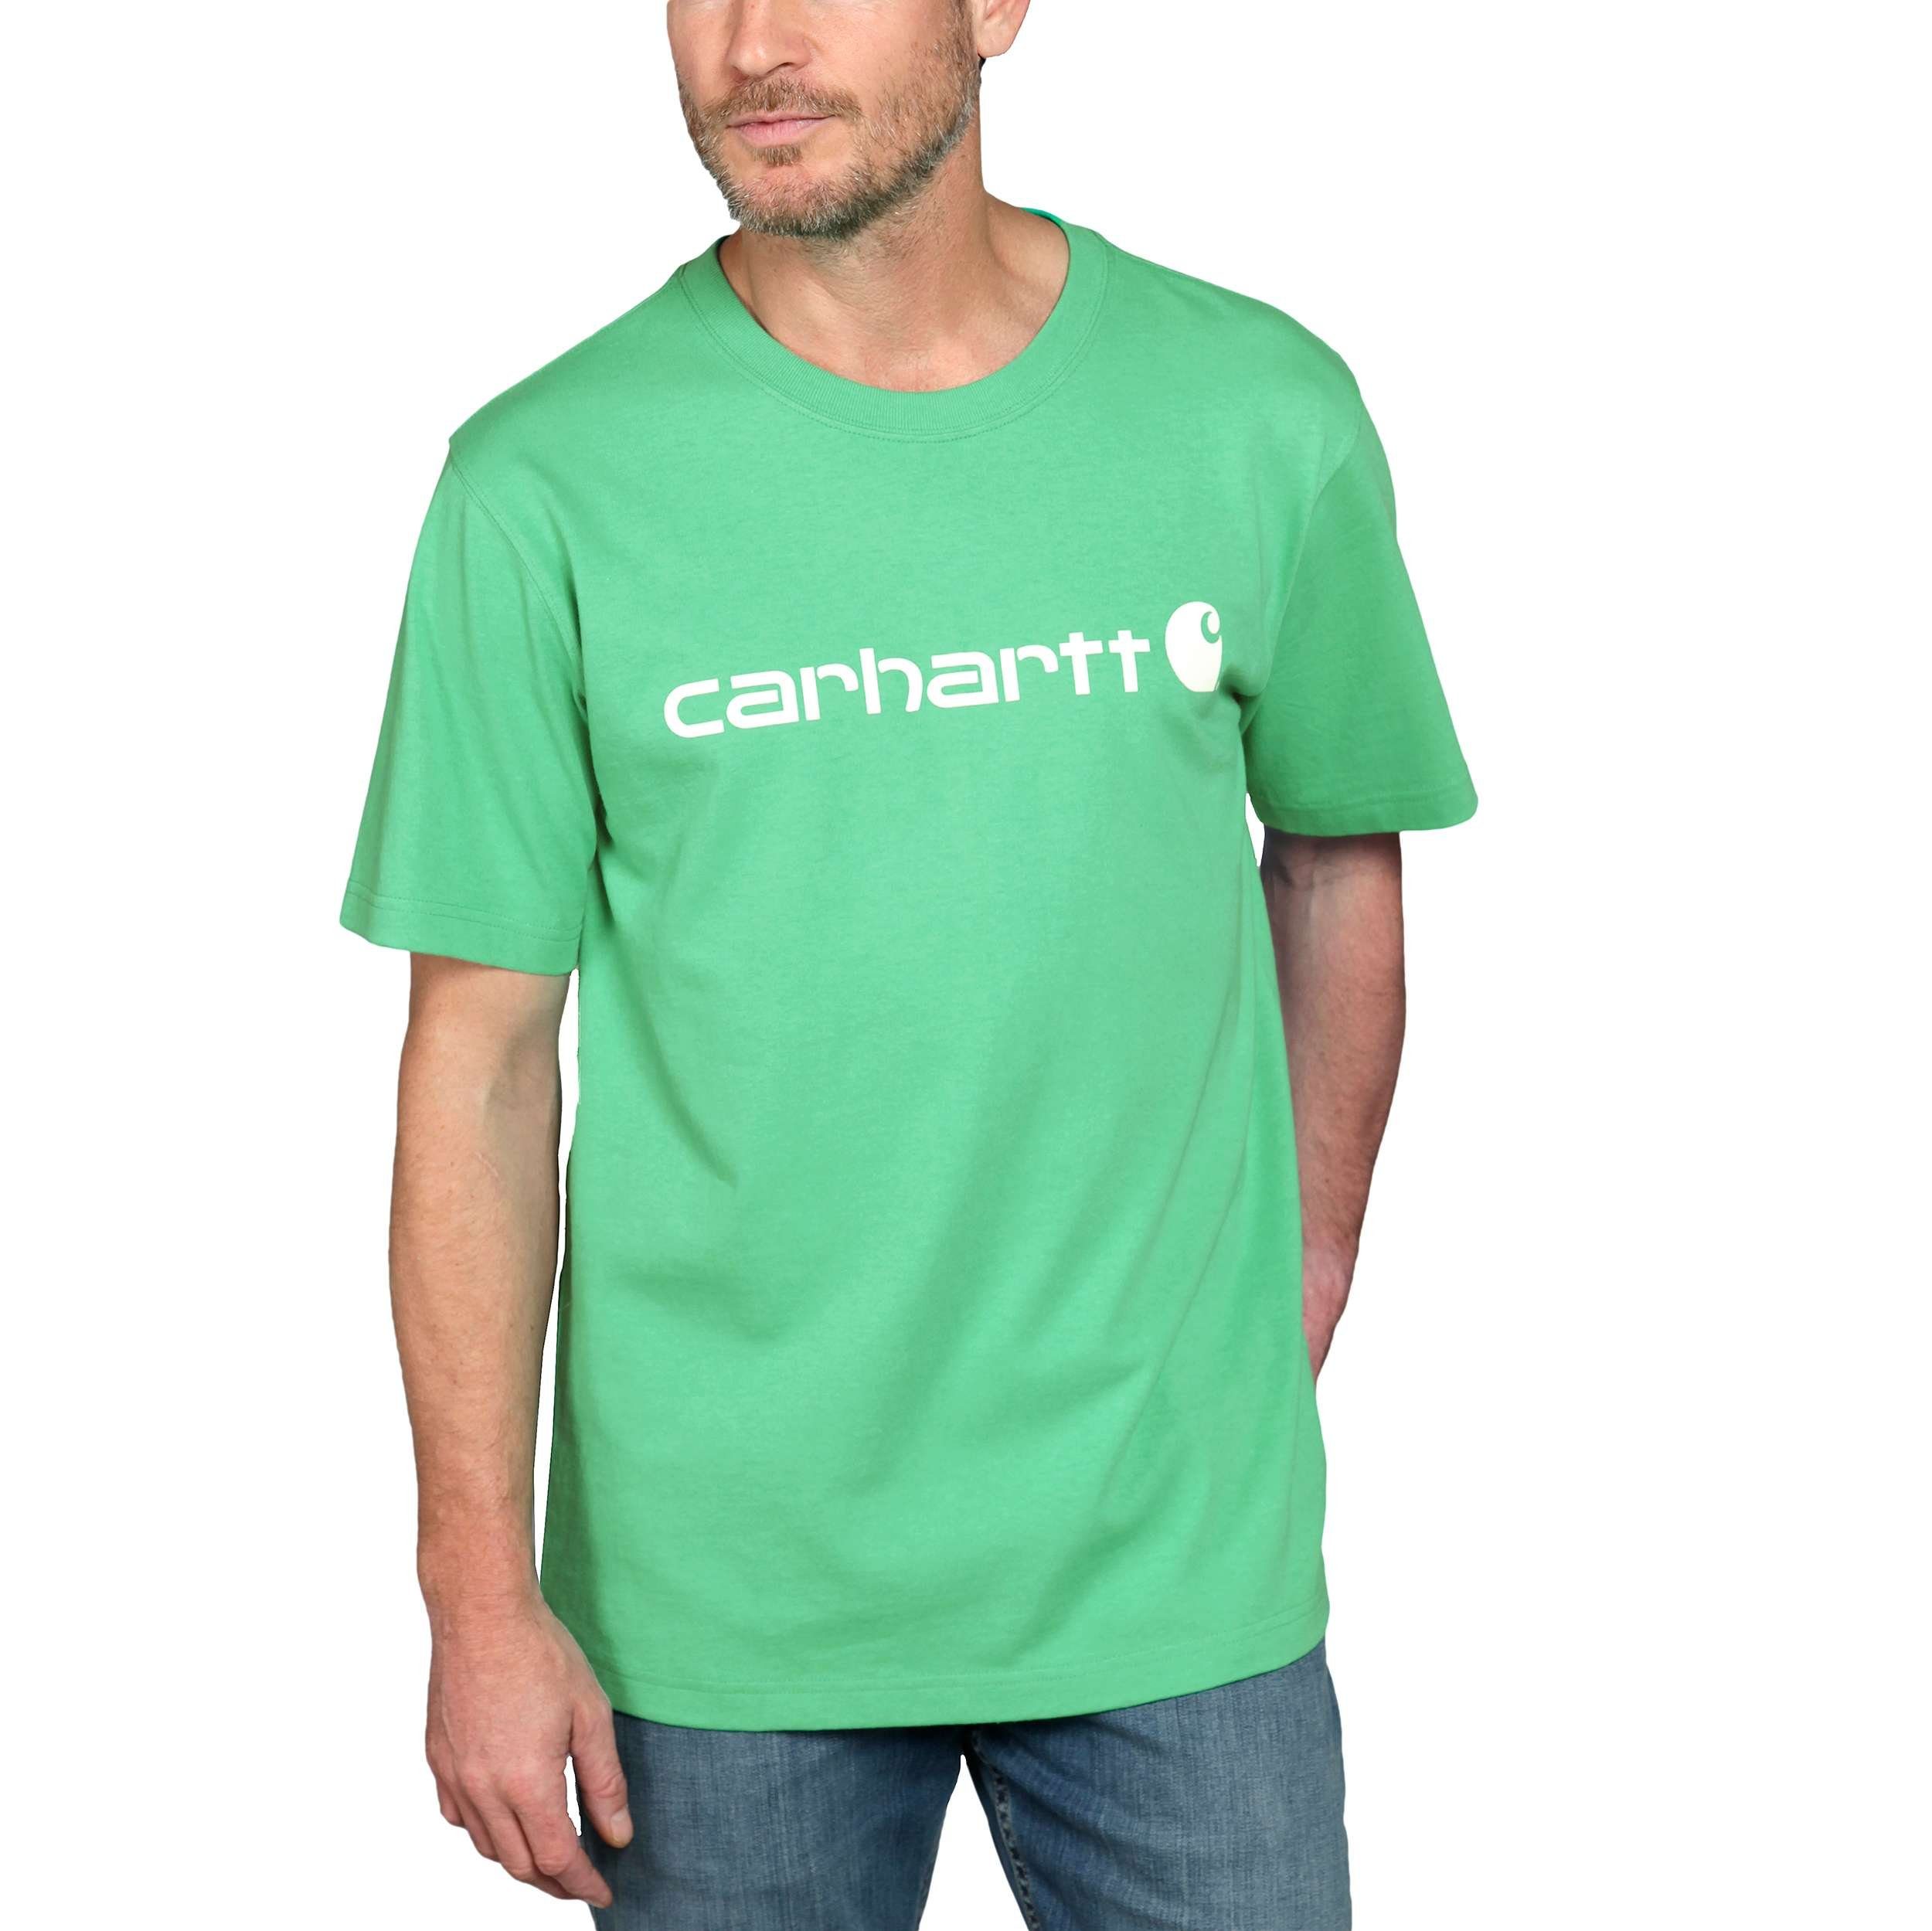 LOGO Carhartt Logo Carhartt T-Shirt auf malachite 103361 T-SHIRT Brust S/S (1-tlg) CORE der